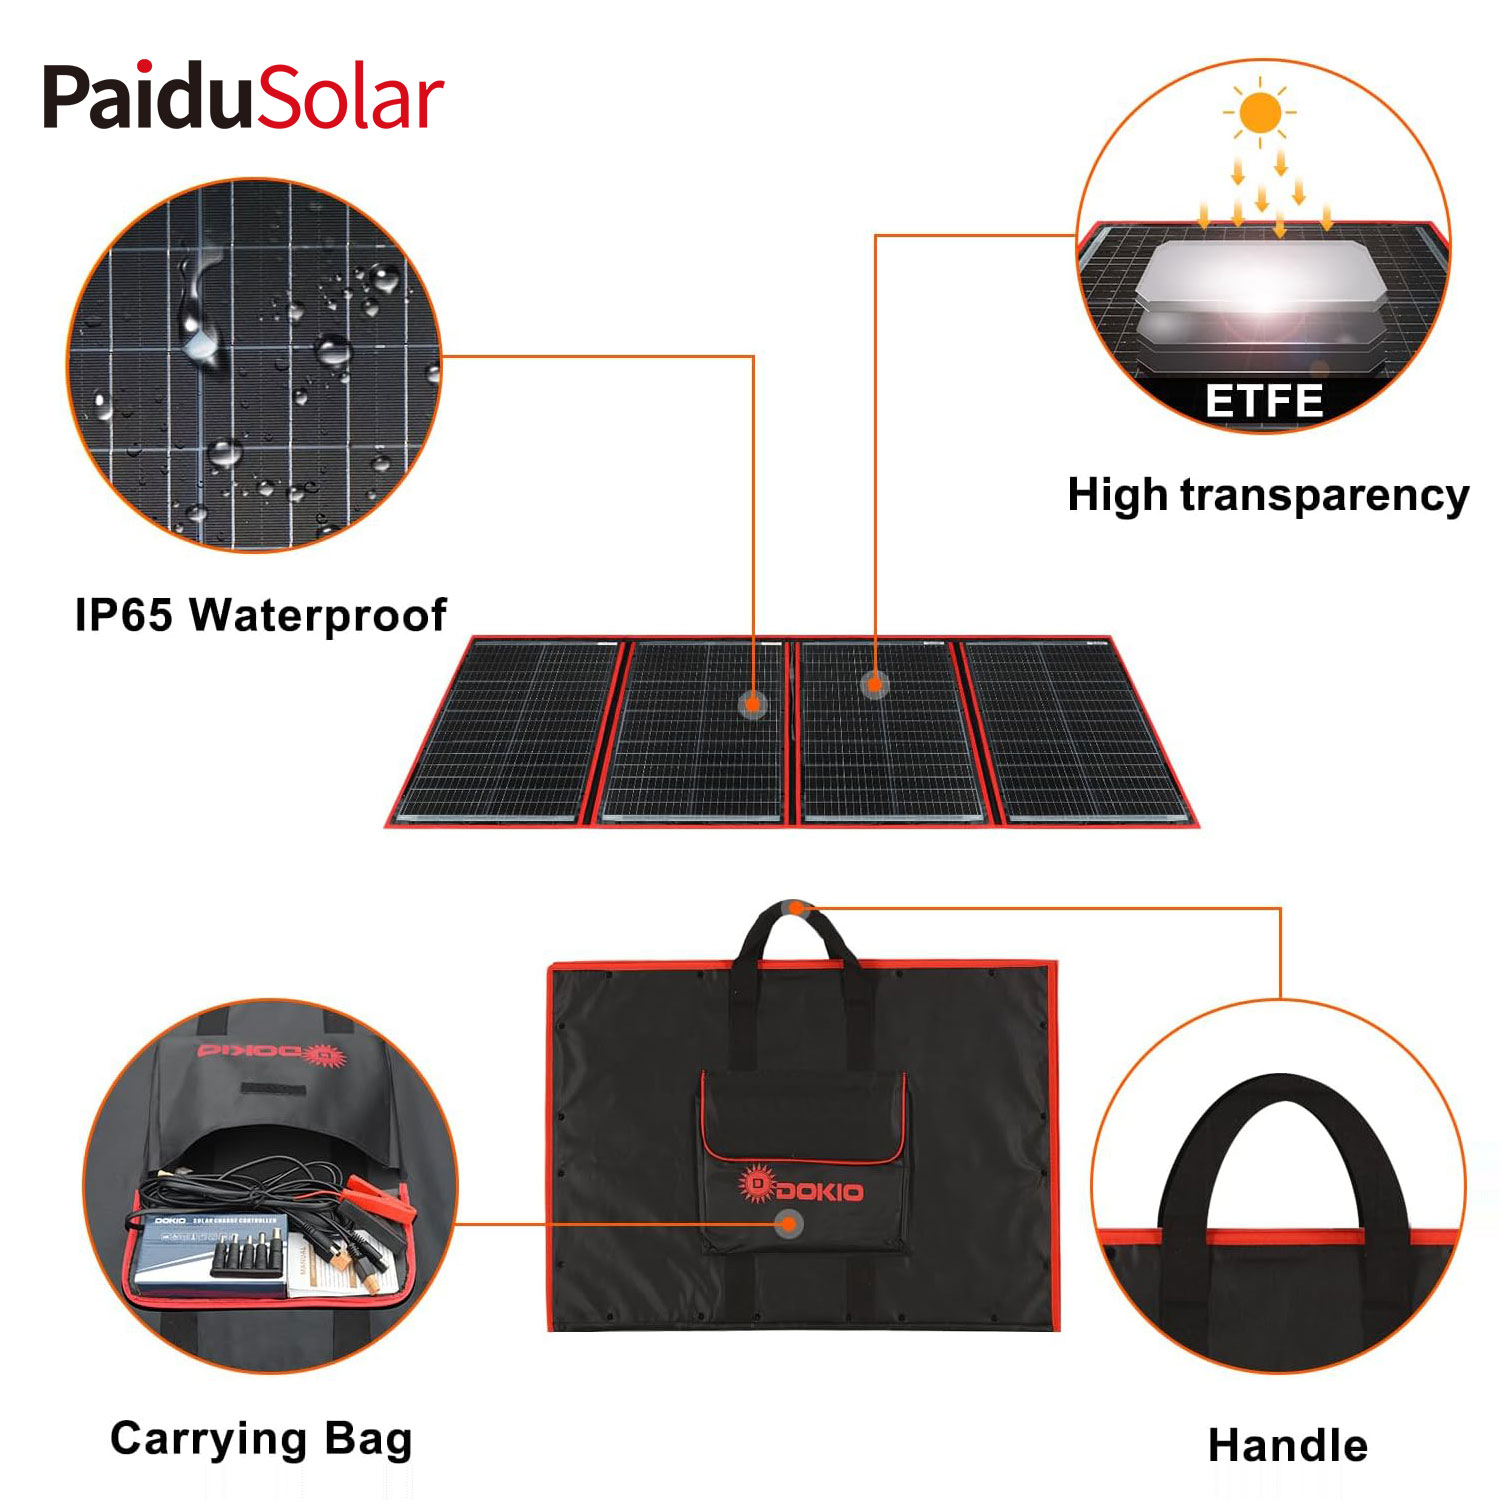 PaiduSolar 220w 18v Portable ausklappbare Solarpanel Kit Fir Rv Camping Trailer Noutkraaft_2t21